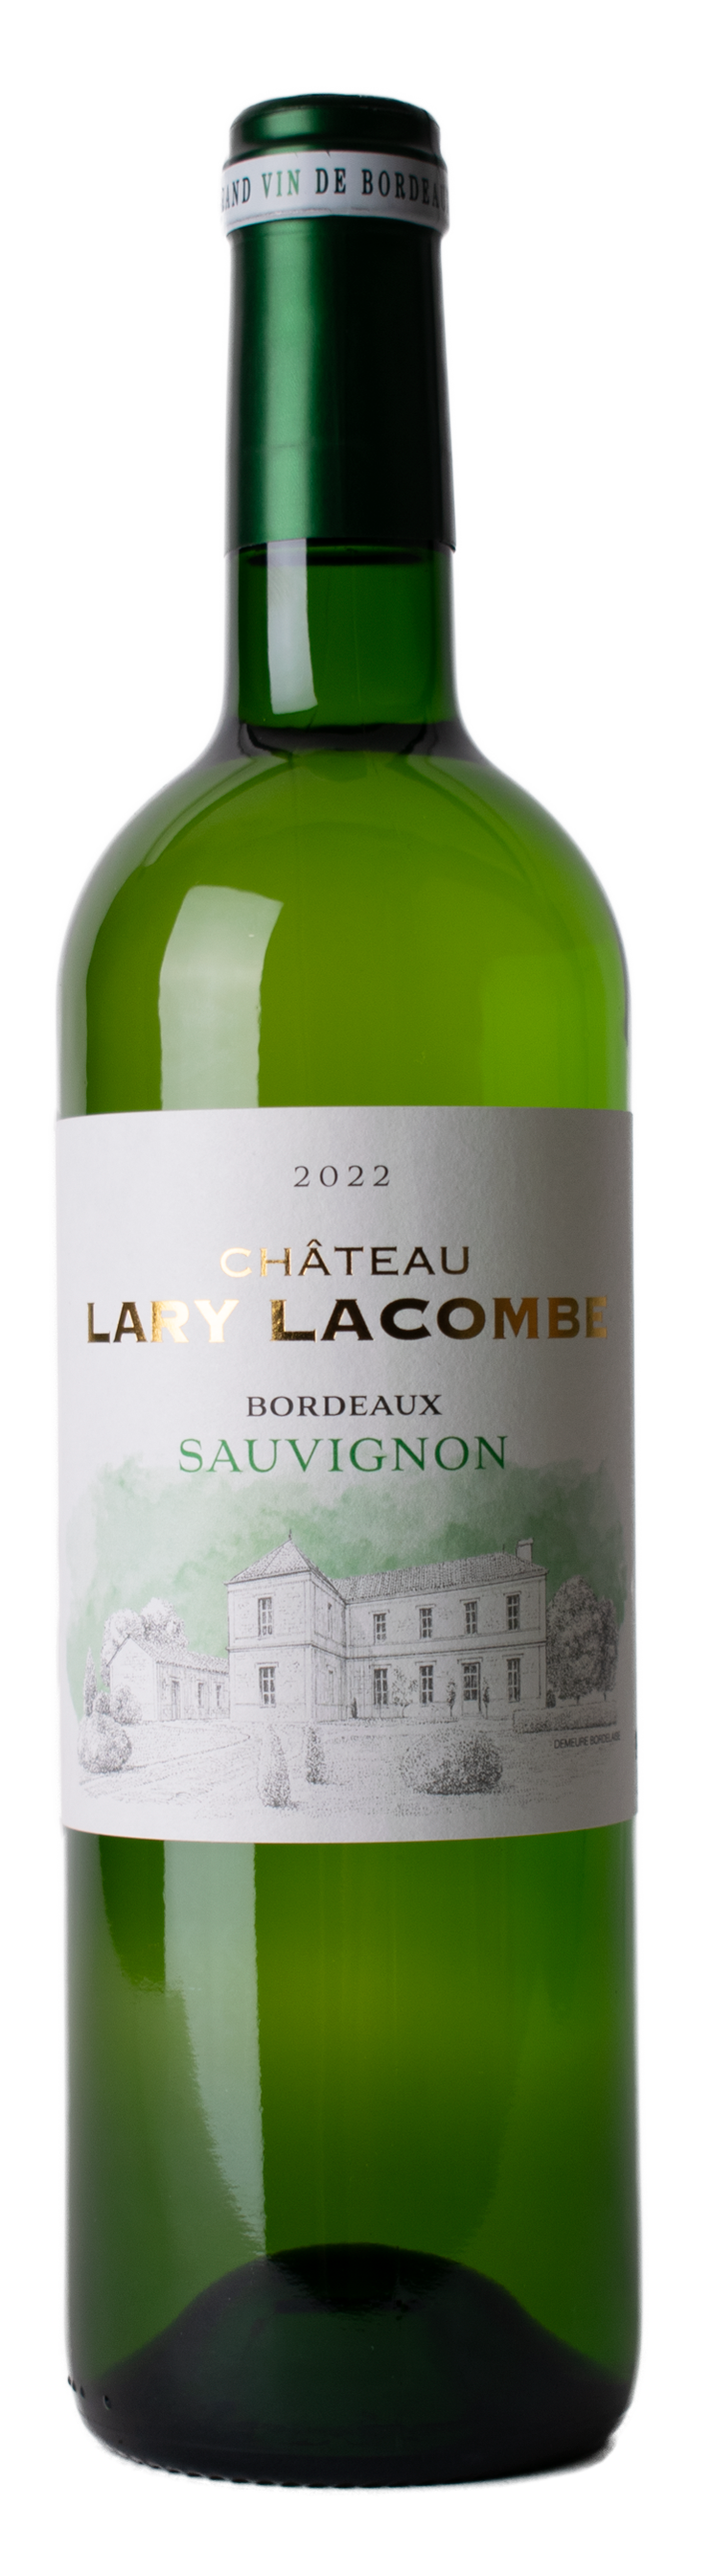 Bordeaux blanc 2022 Sauvignon Lary Lacombe